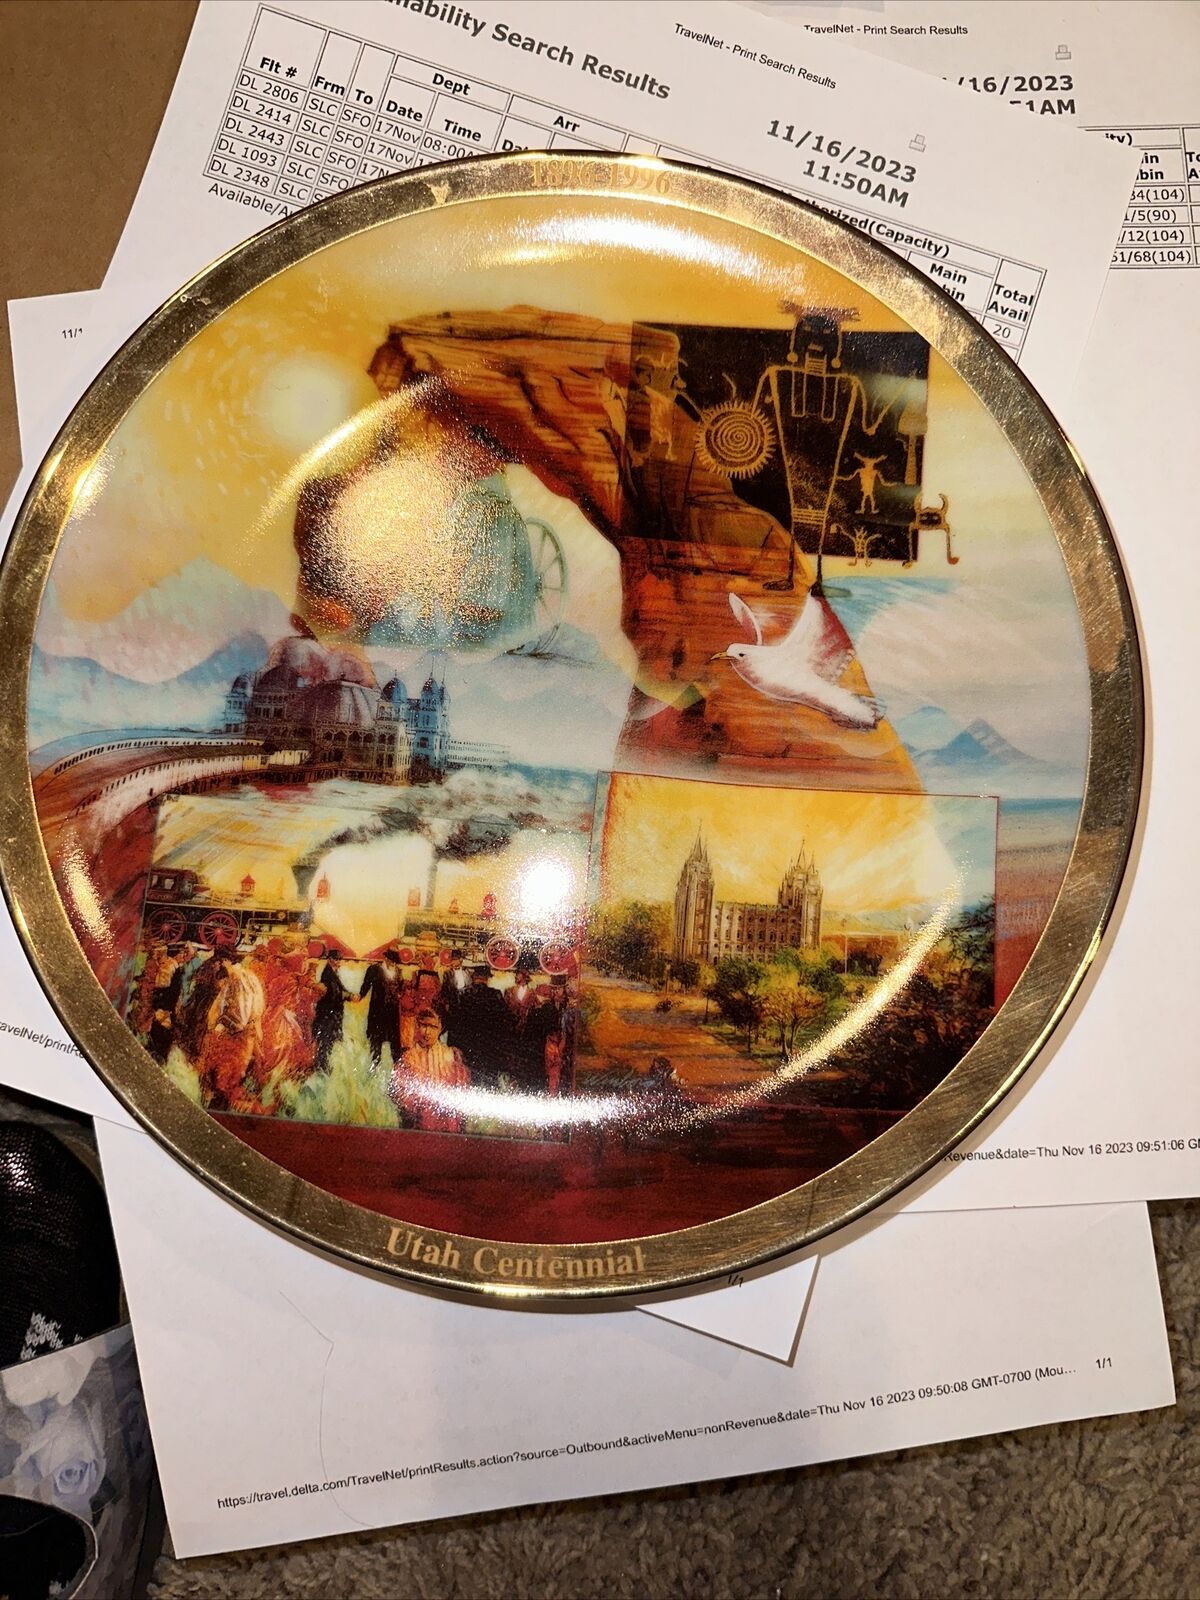 Utah Centennial Decorative Plate Number 1908